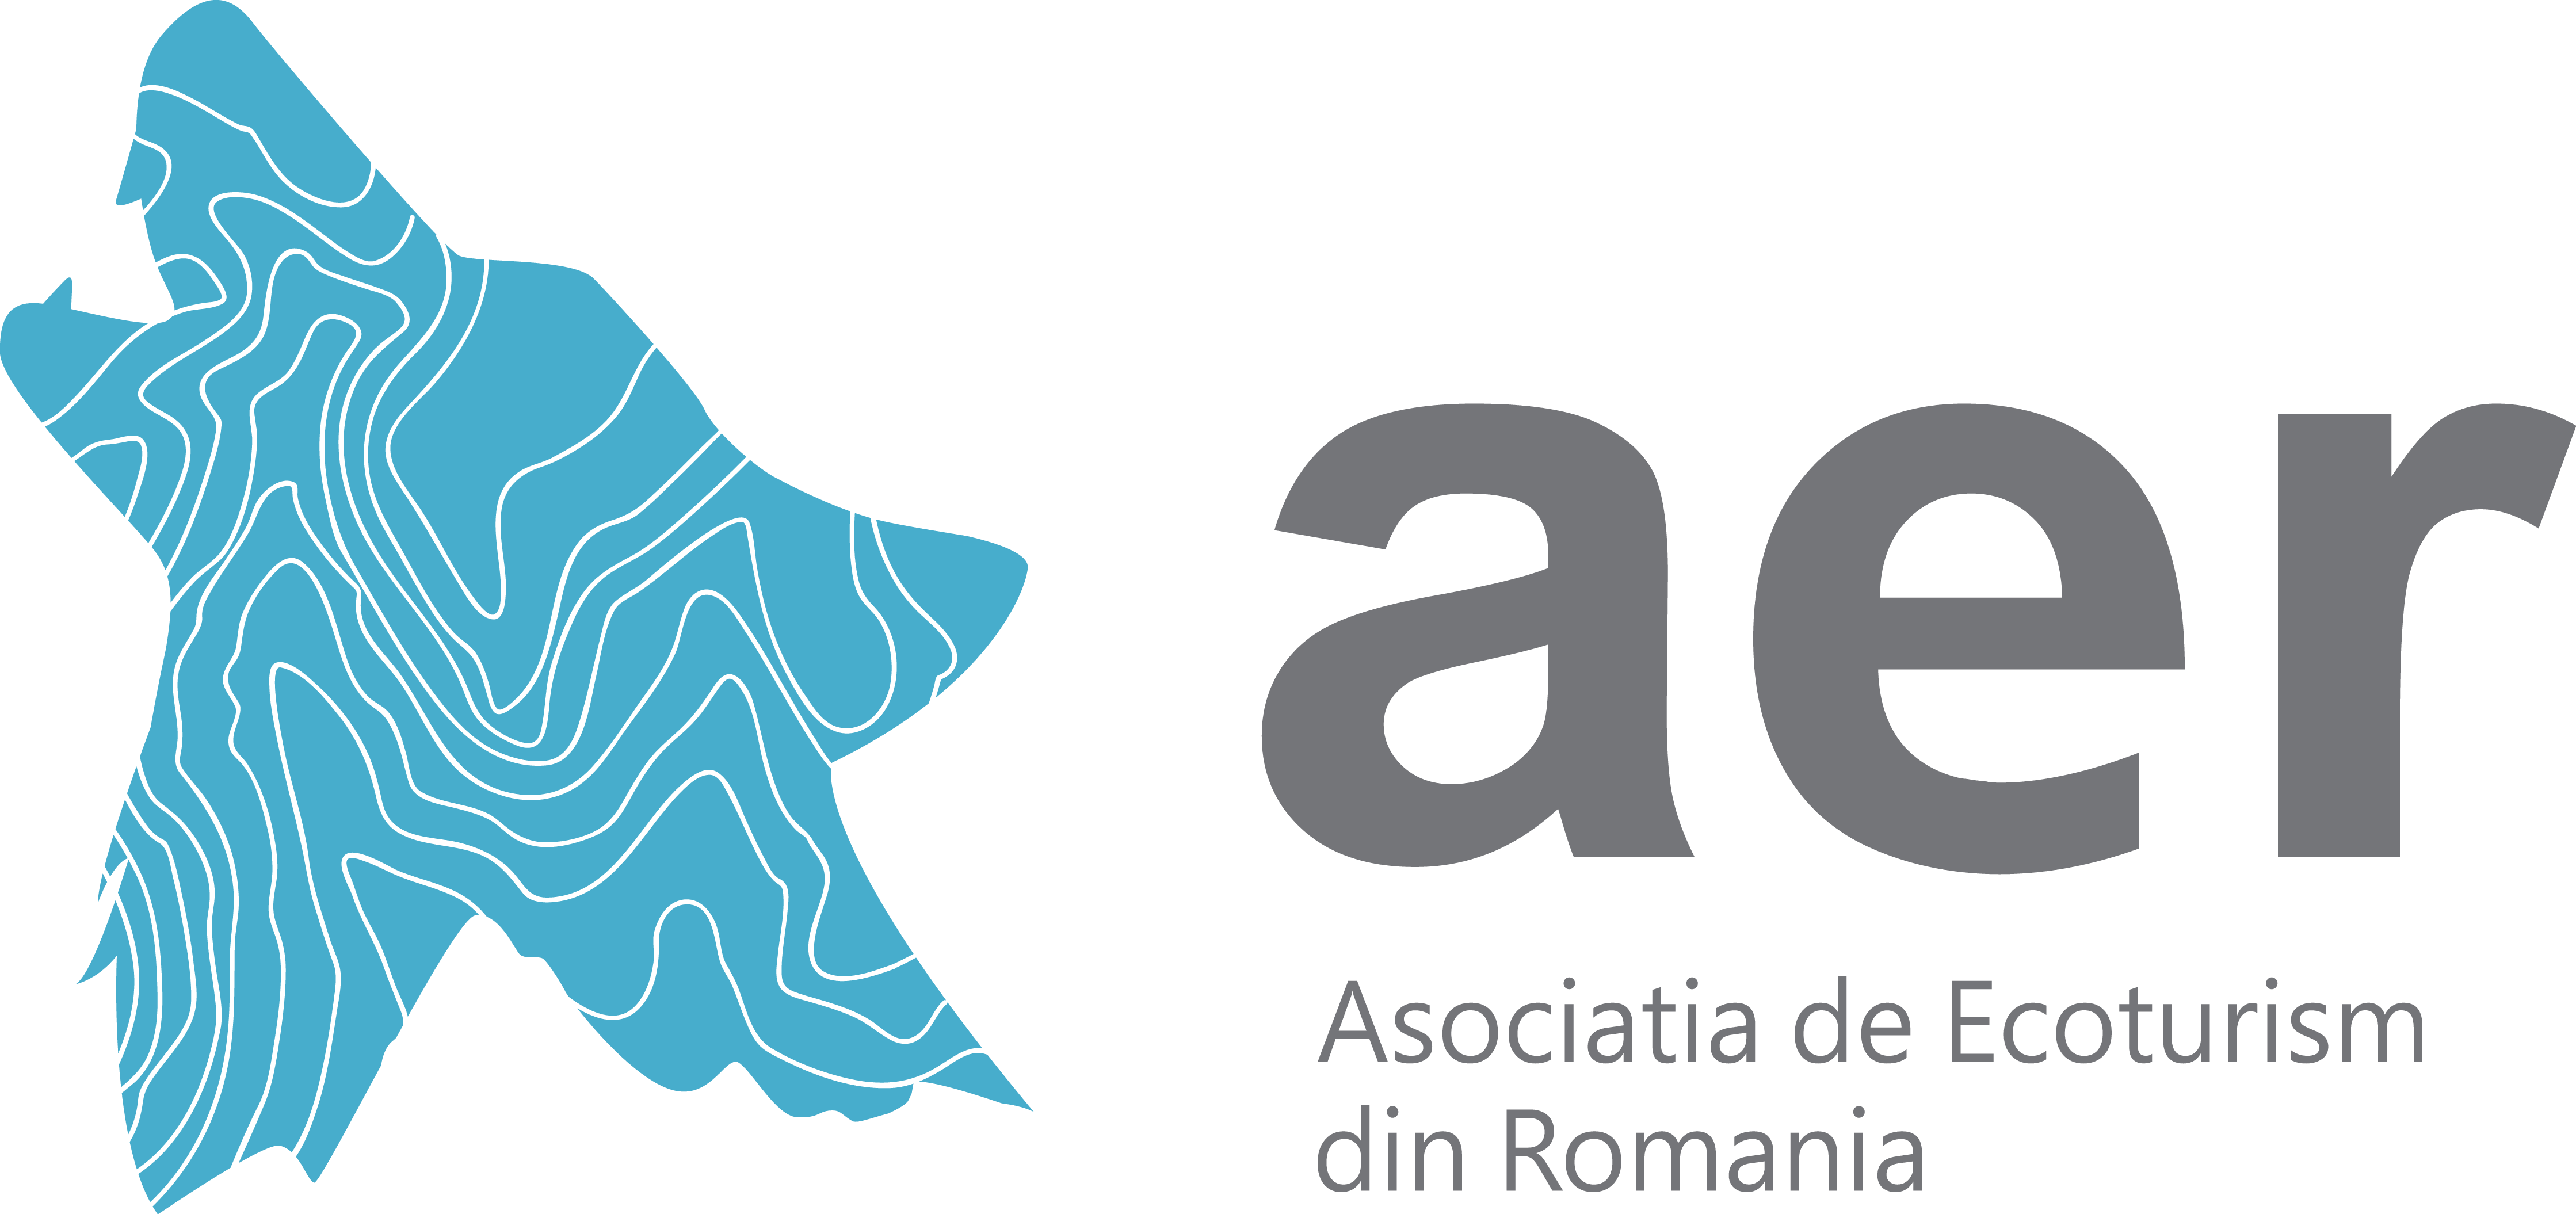 Asociația de Ecoturism din România logo